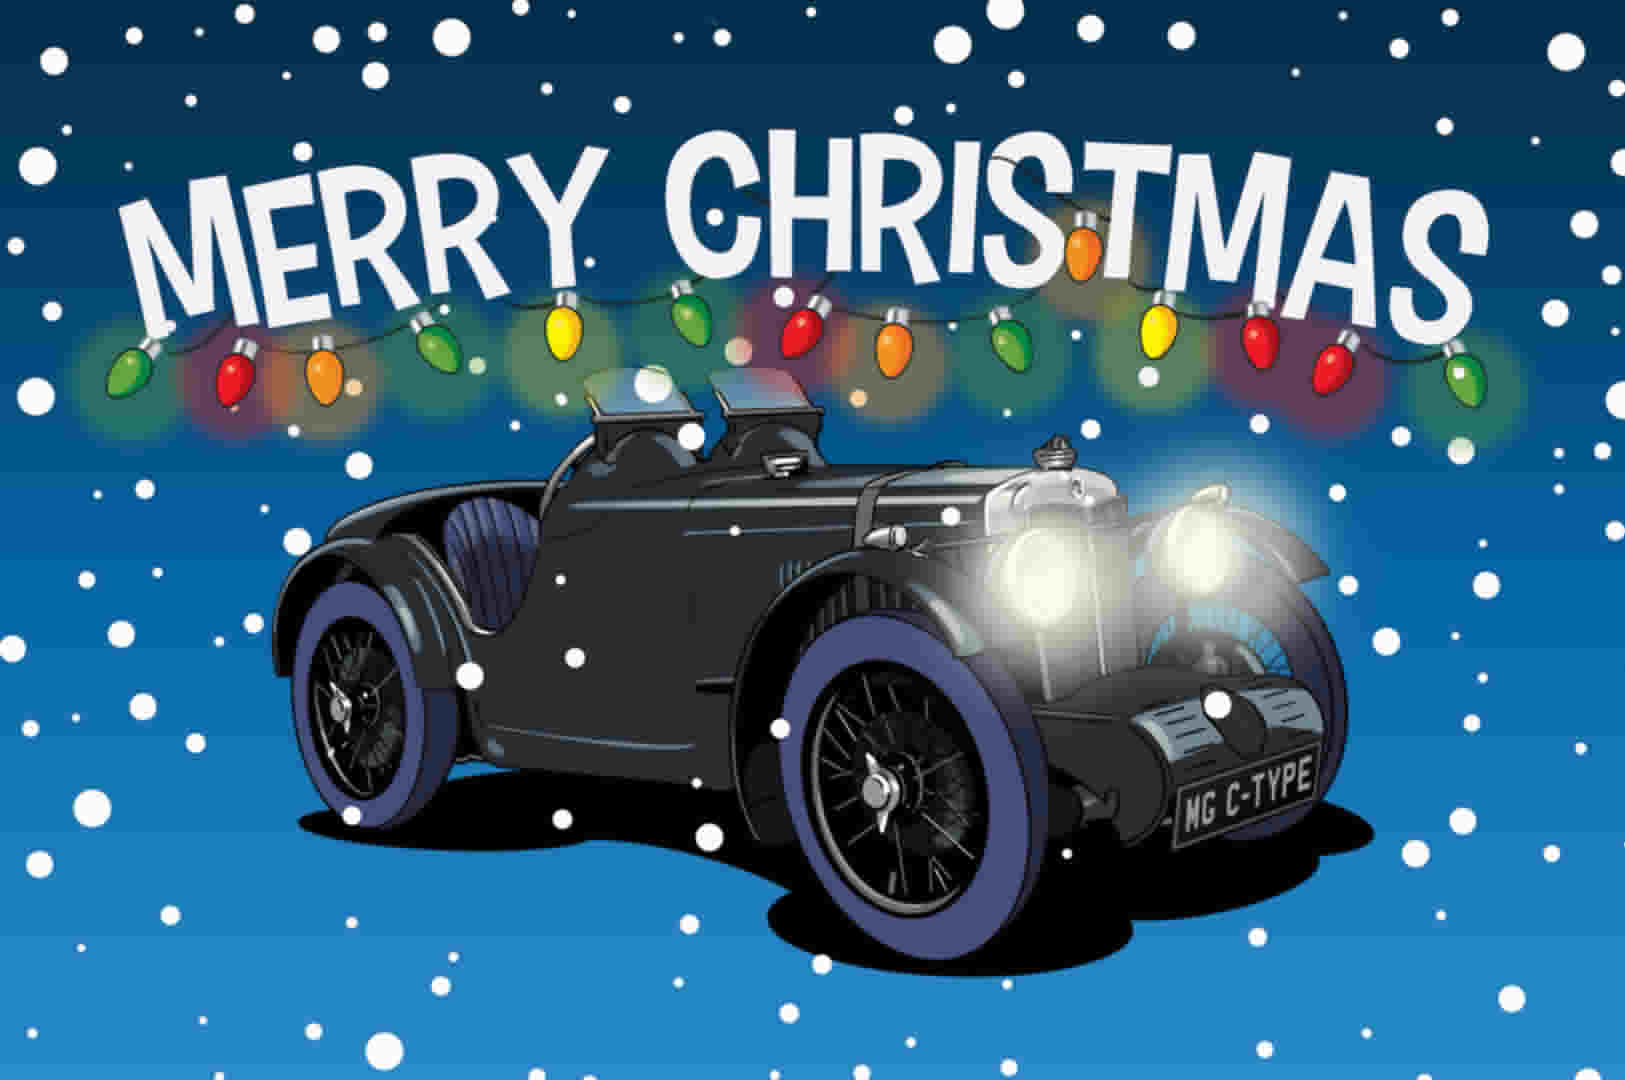 MG C Type Vintage Car Christmas Card